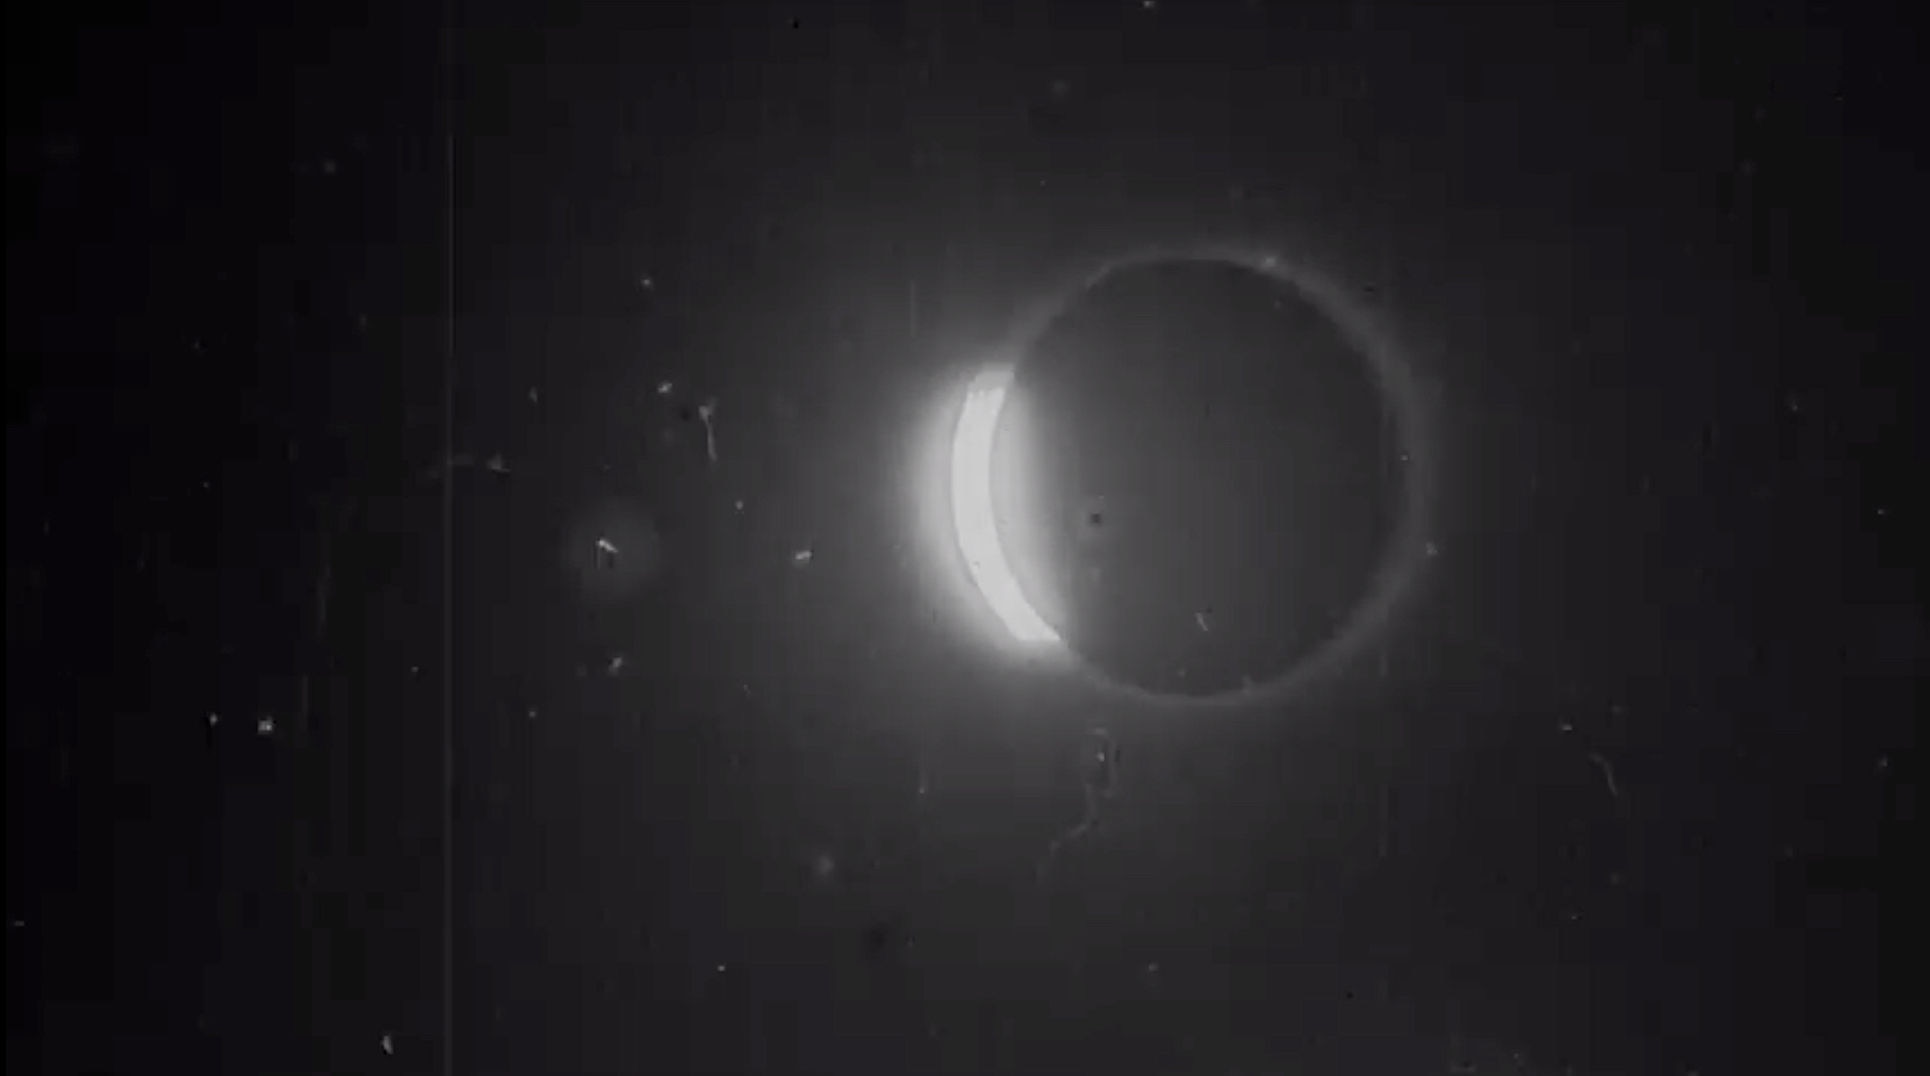 Oldest surviving solar eclipse footage captured in 1900